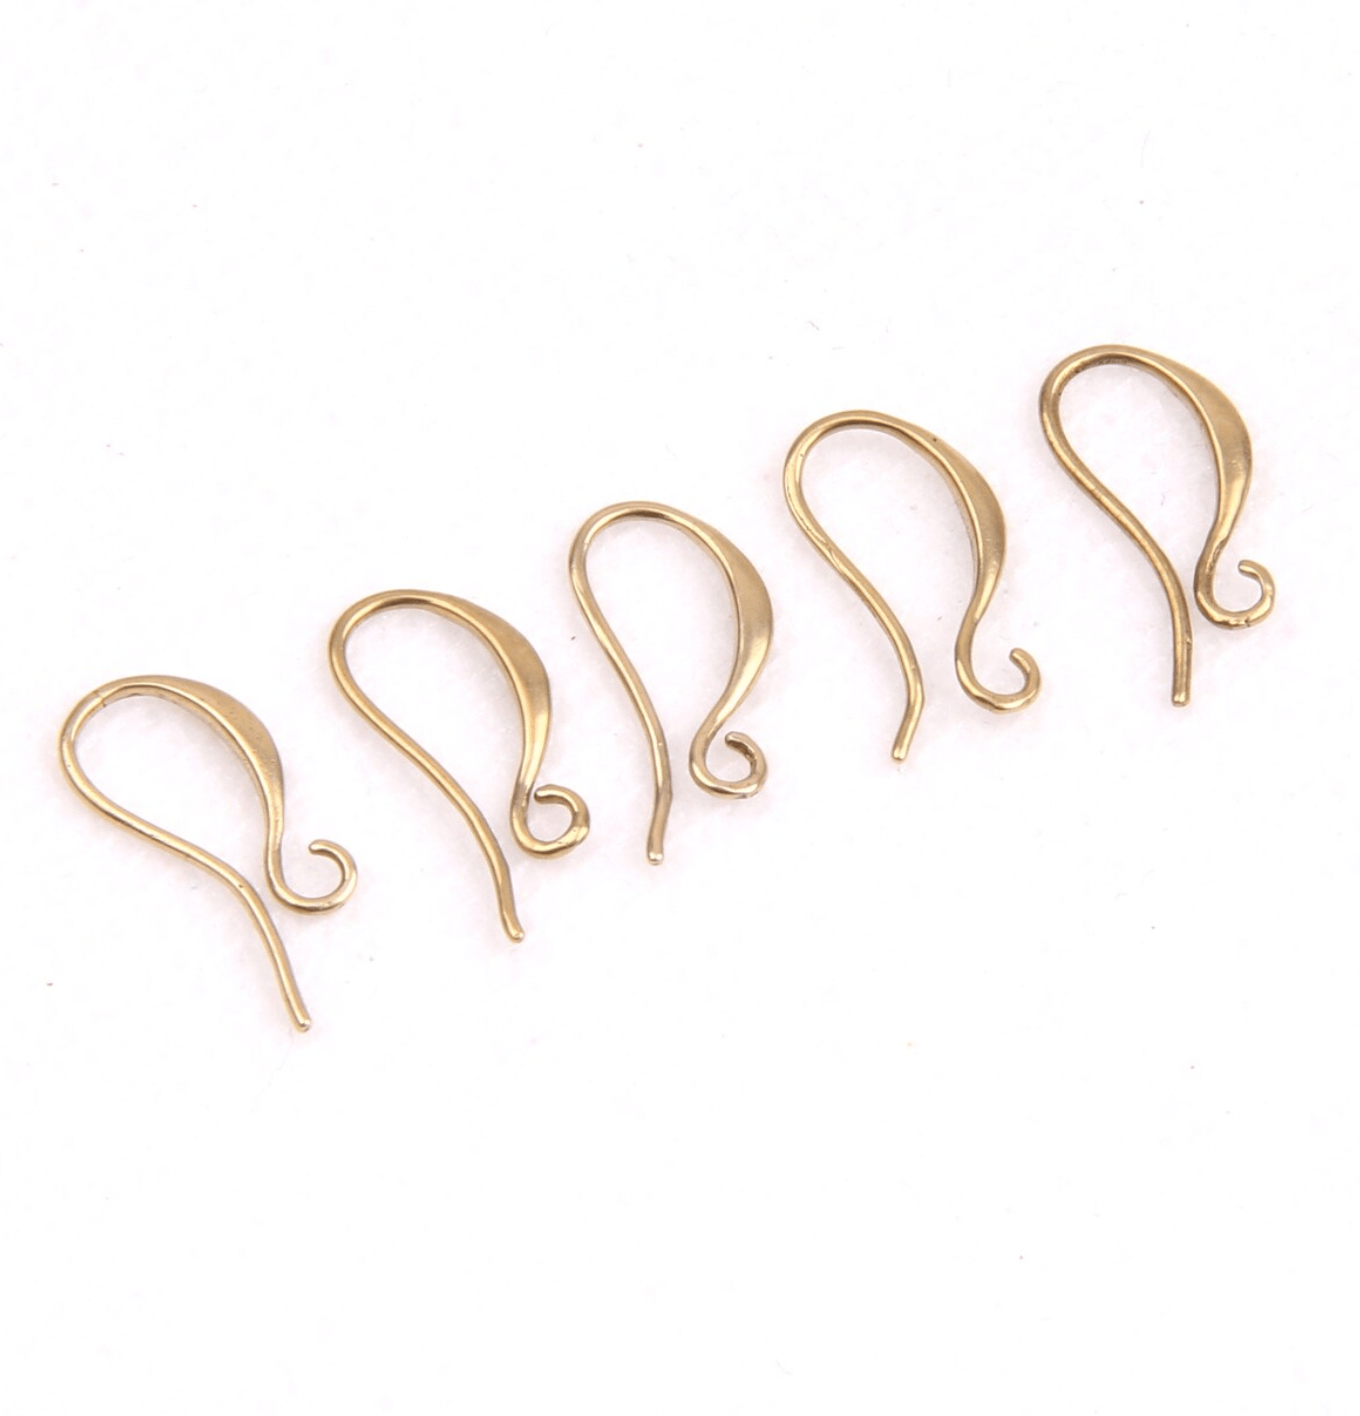 Simple Raw Brass Hooks (Sold in pair) - ClartStudios - Polymer clay Jewellery